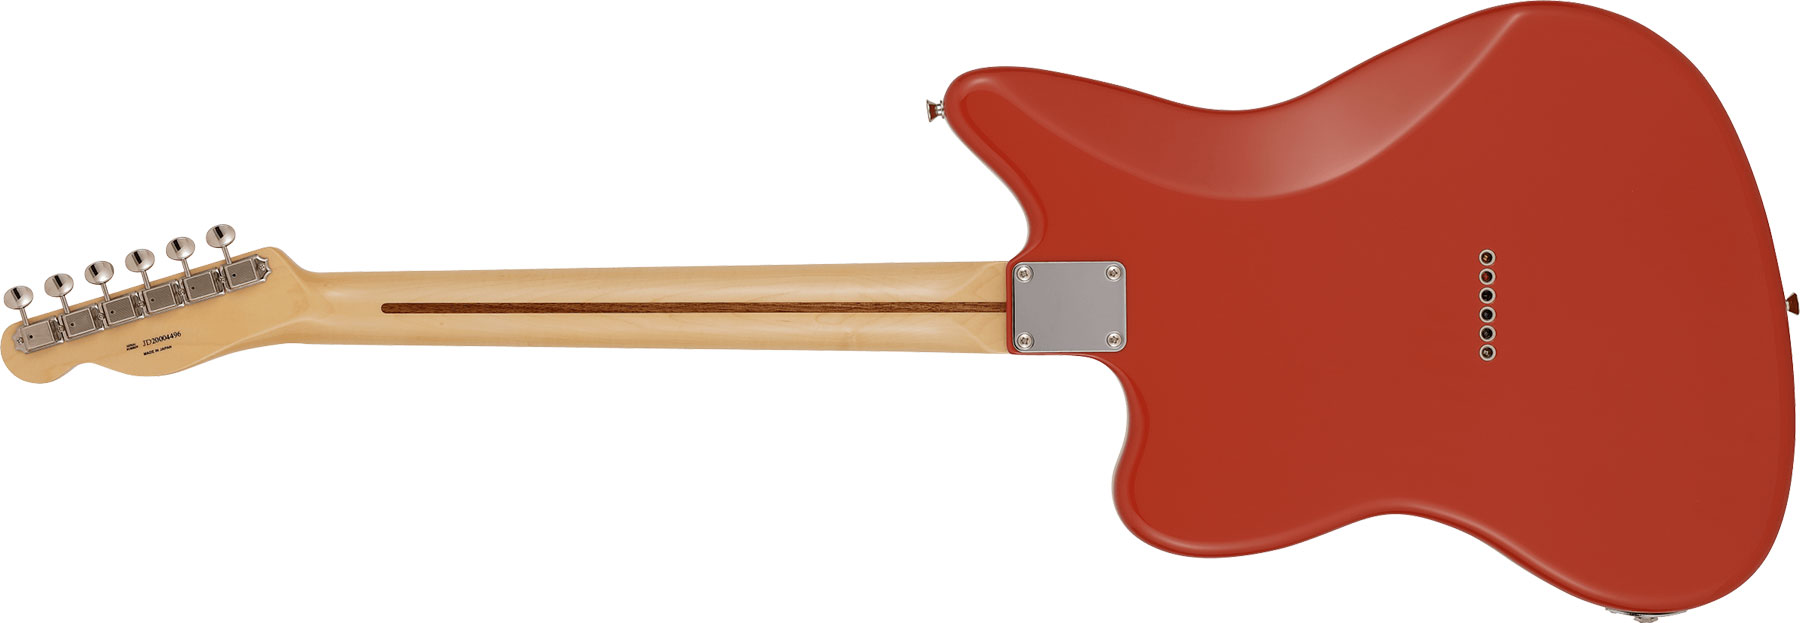 Fender Tele Offset Ltd Jap 2s Ht Mn - Fiesta Red - Guitarra electrica retro rock - Variation 1